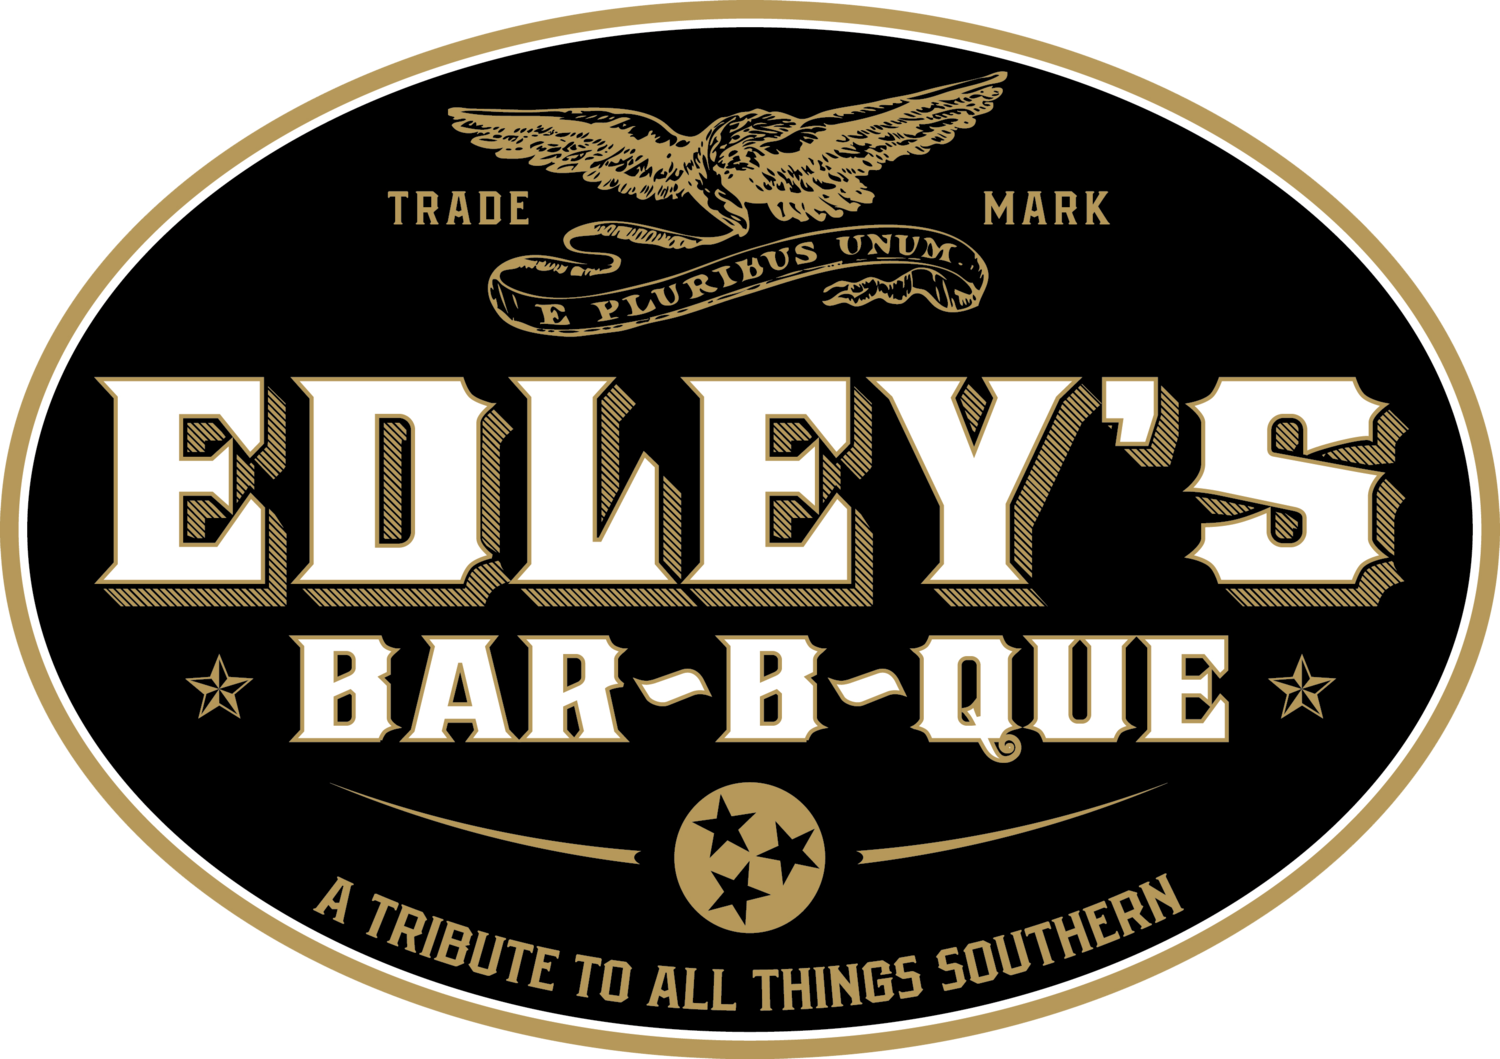 Edley&#39;s Bar-B-Que